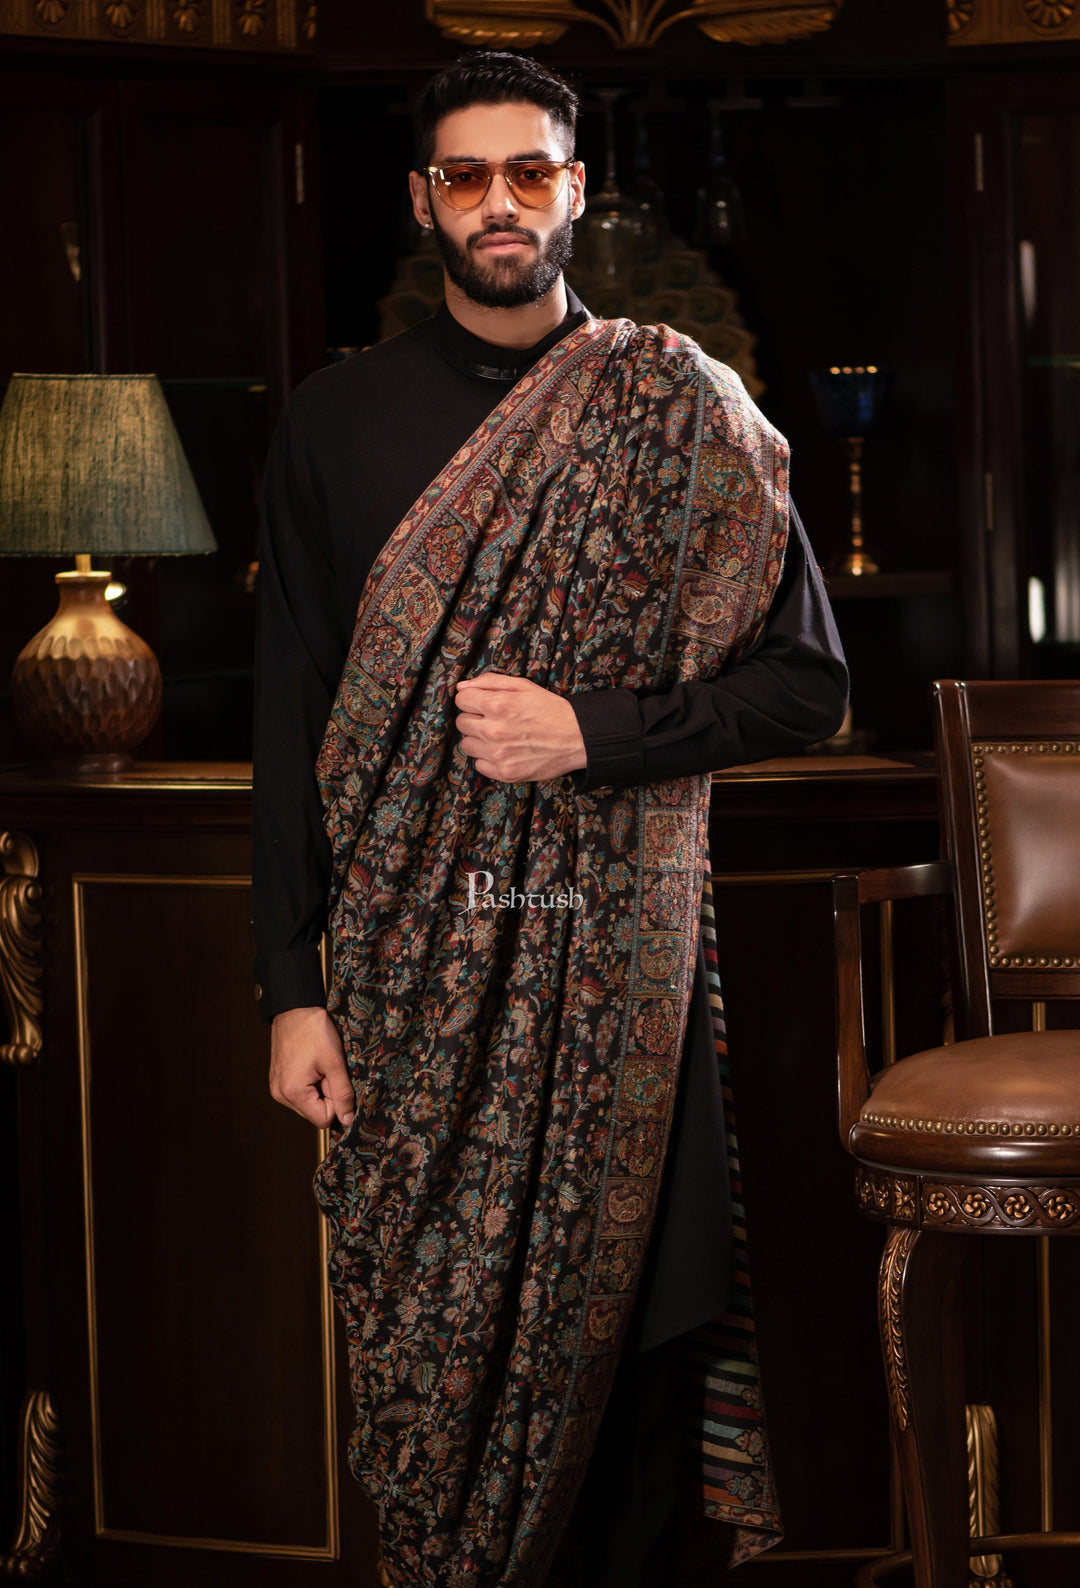 Pashtush India Mens Shawls Gents Shawl Pashtush men Extra Fine Wool shawl, ethnic design, Mens Lohi, Full size, Black